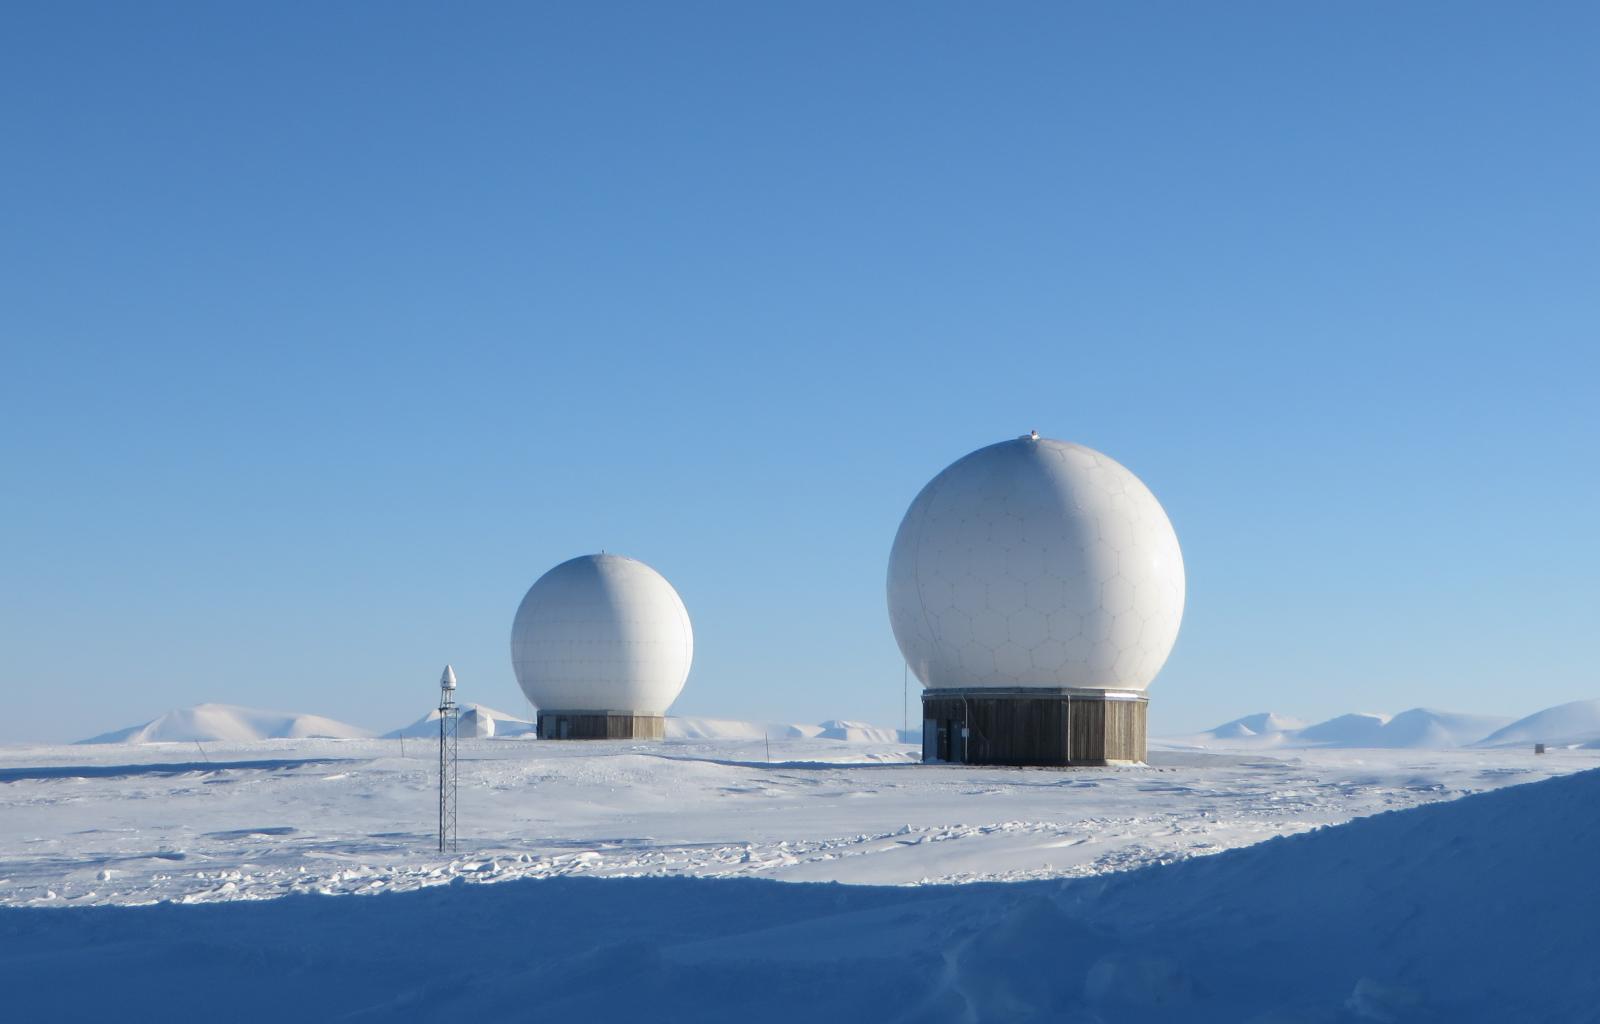 Two Arctic radar domes